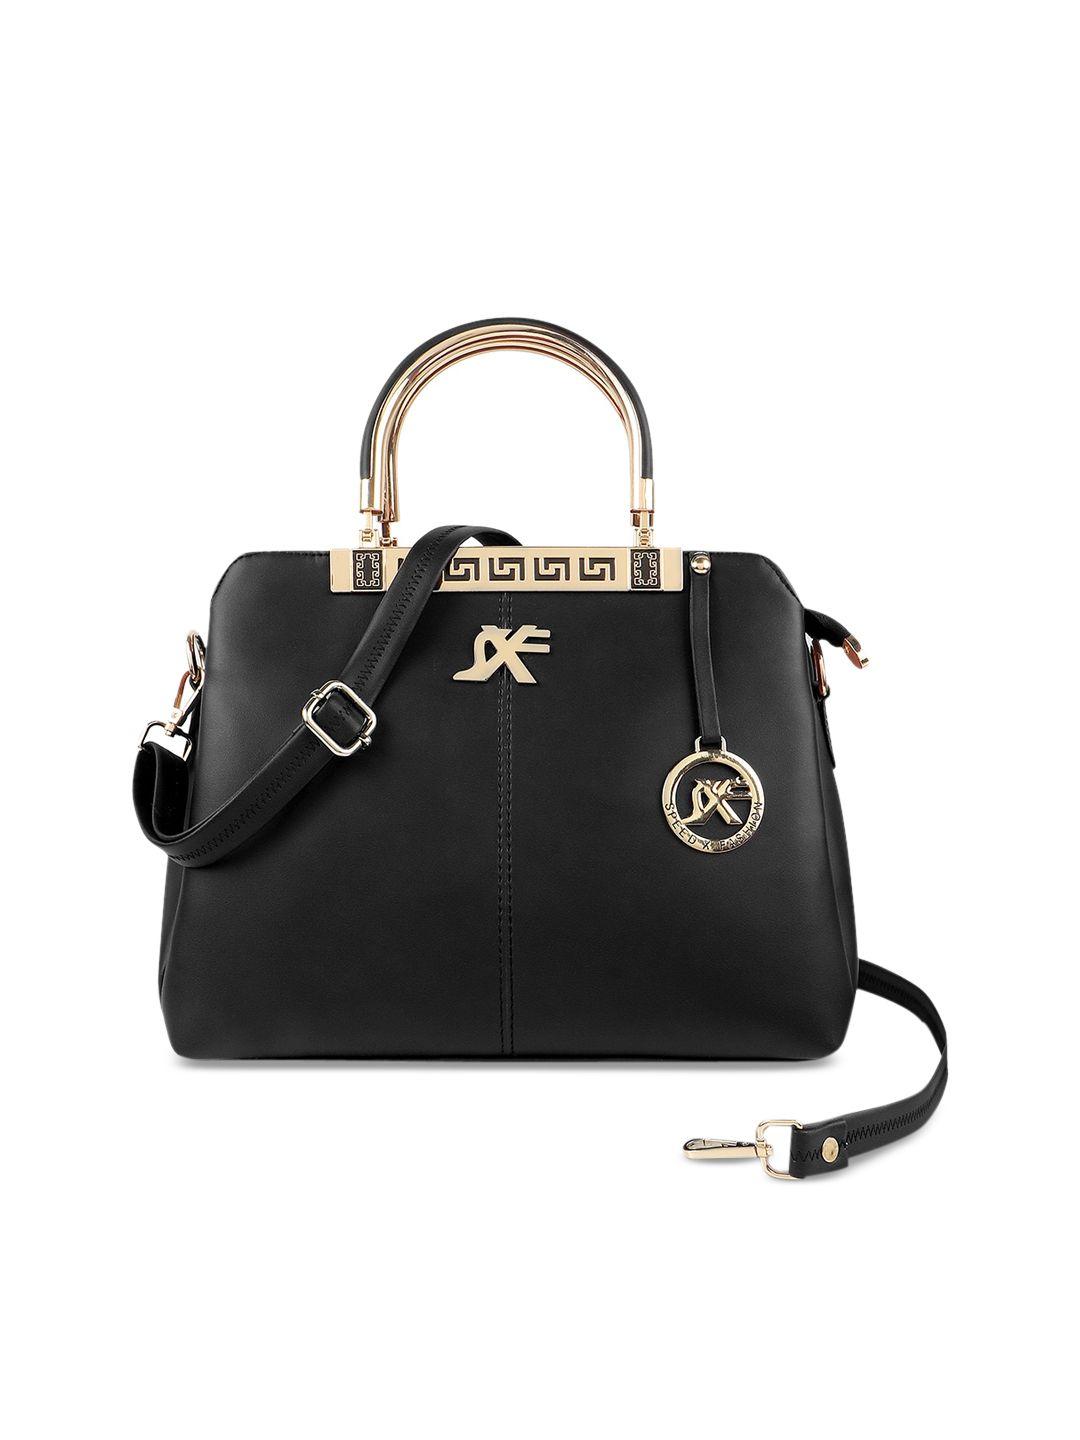 sxf speed x fashion black pu structured handheld bag with tasselled